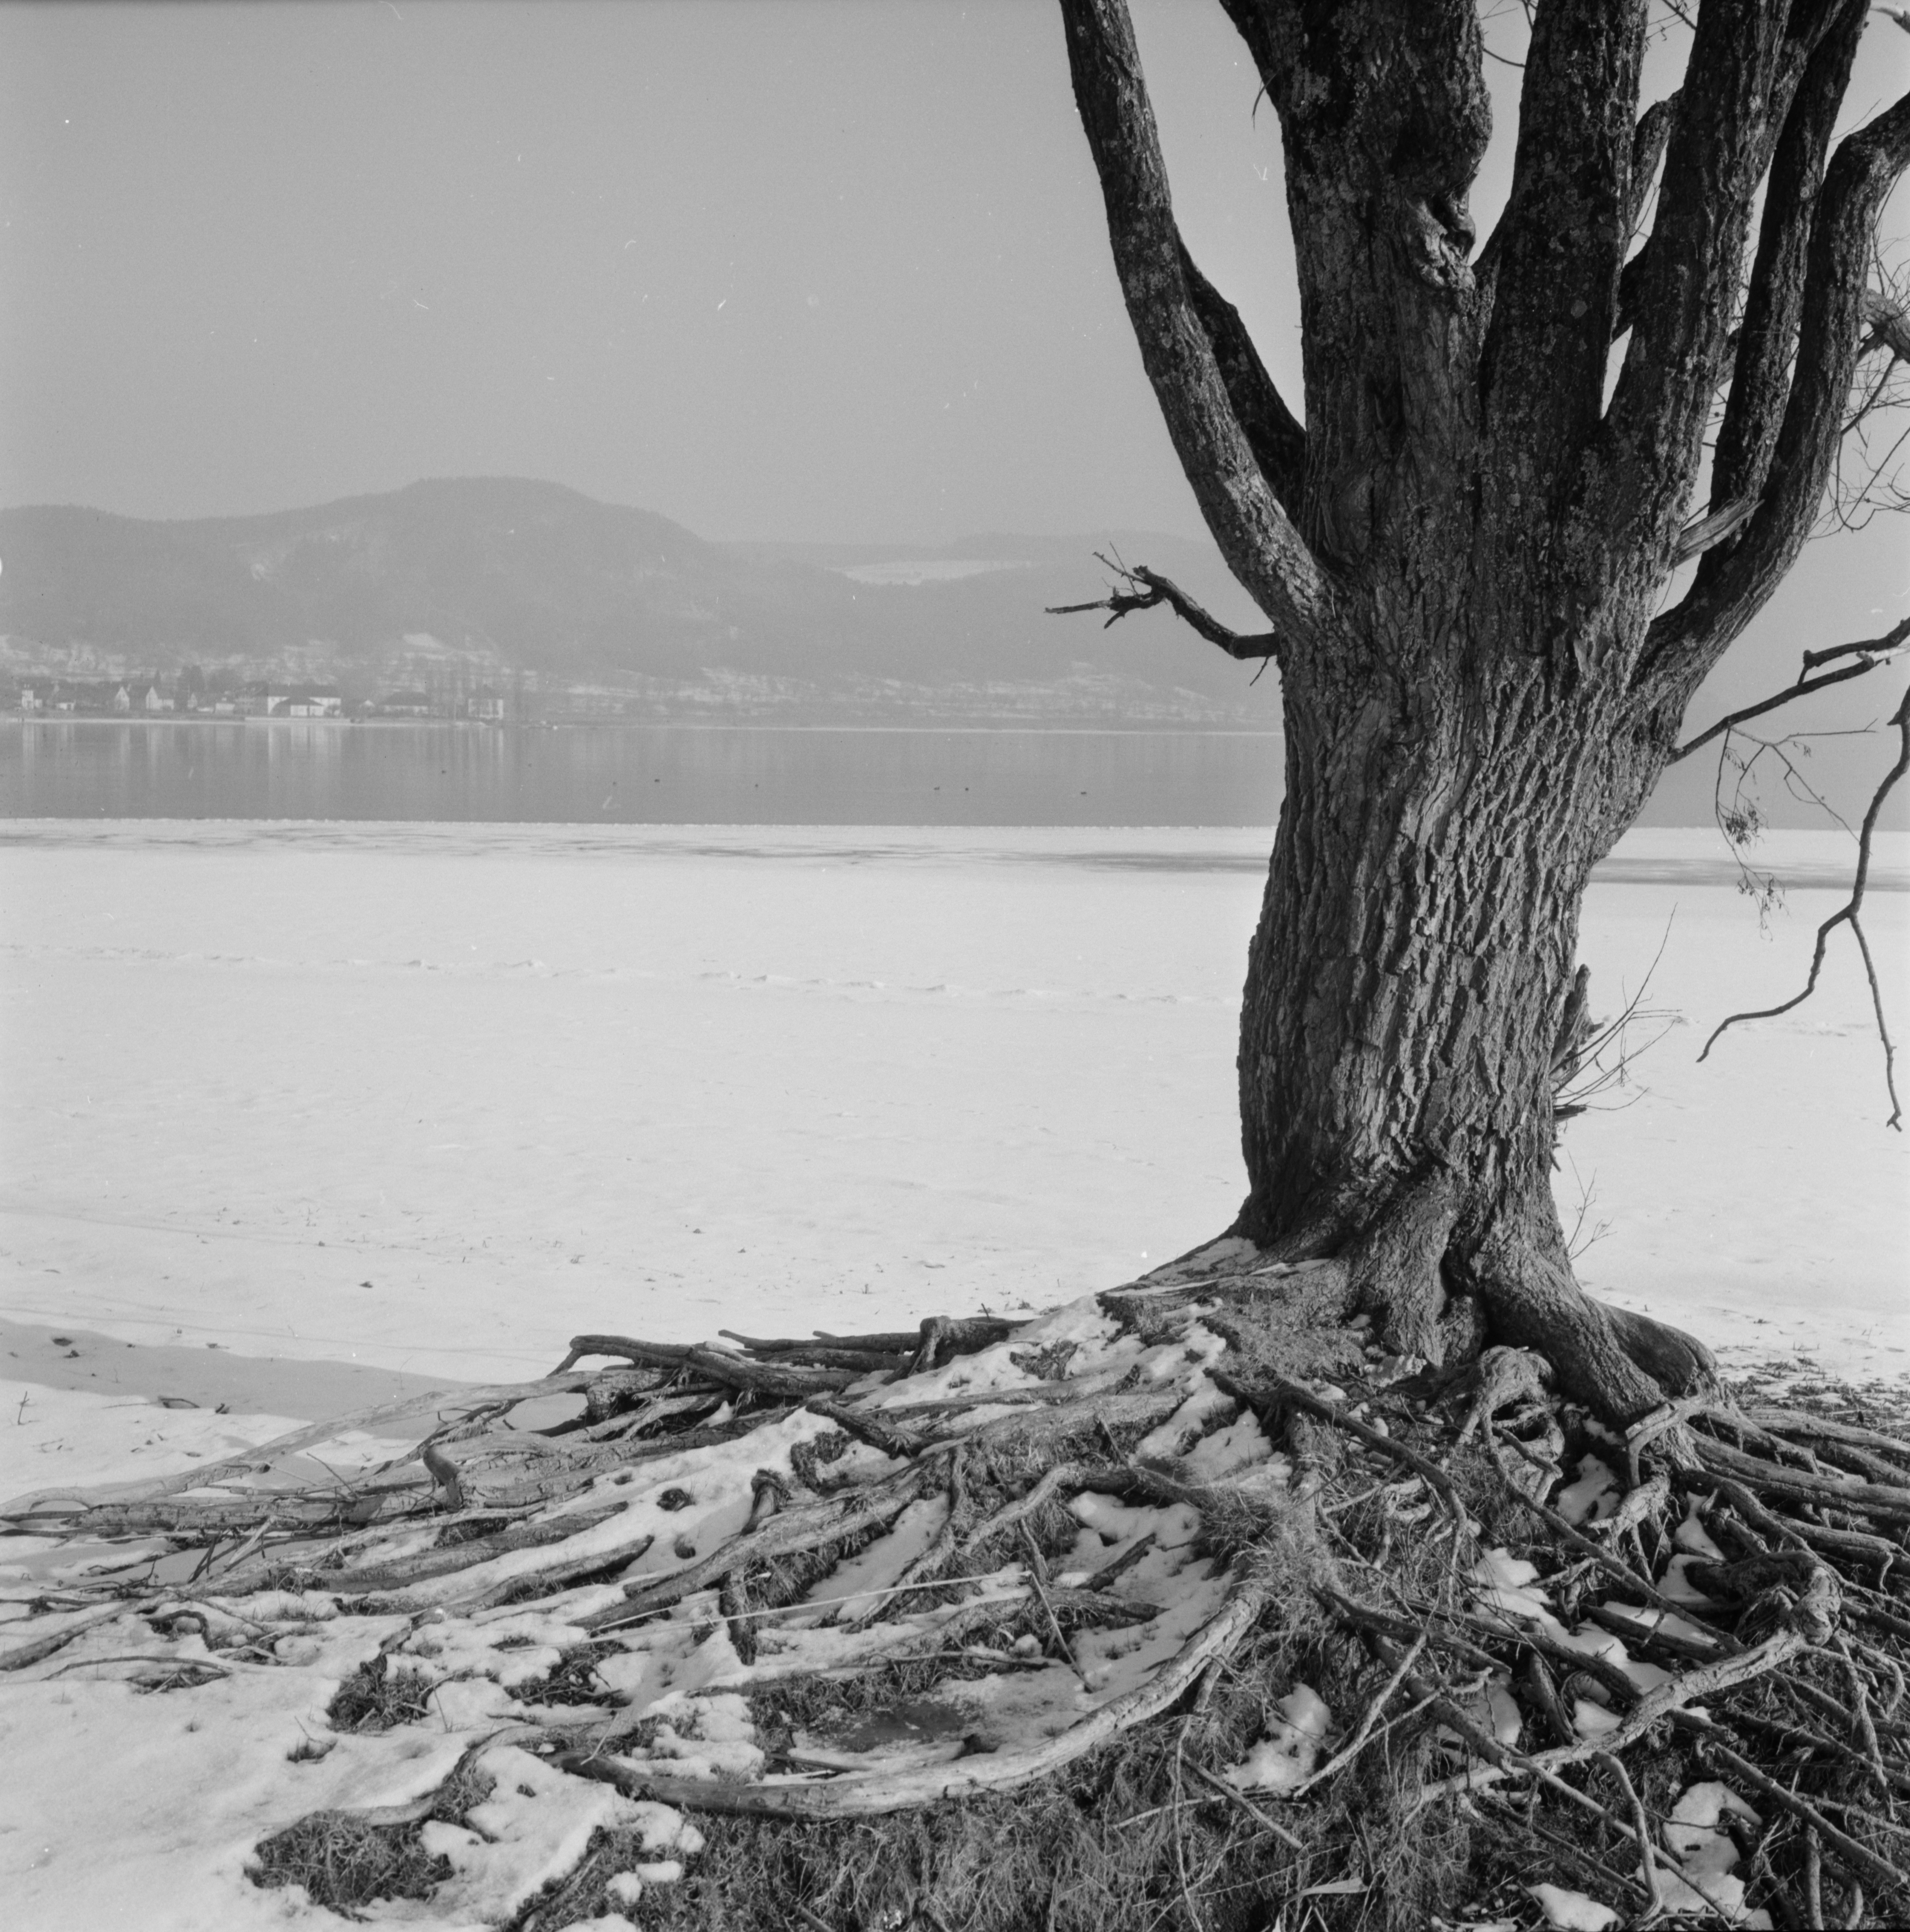  Gustav Hotz, Winter am Bodensee, Stadtarchiv Stockach, Bildarchiv Foto Hotz KBg_1067 